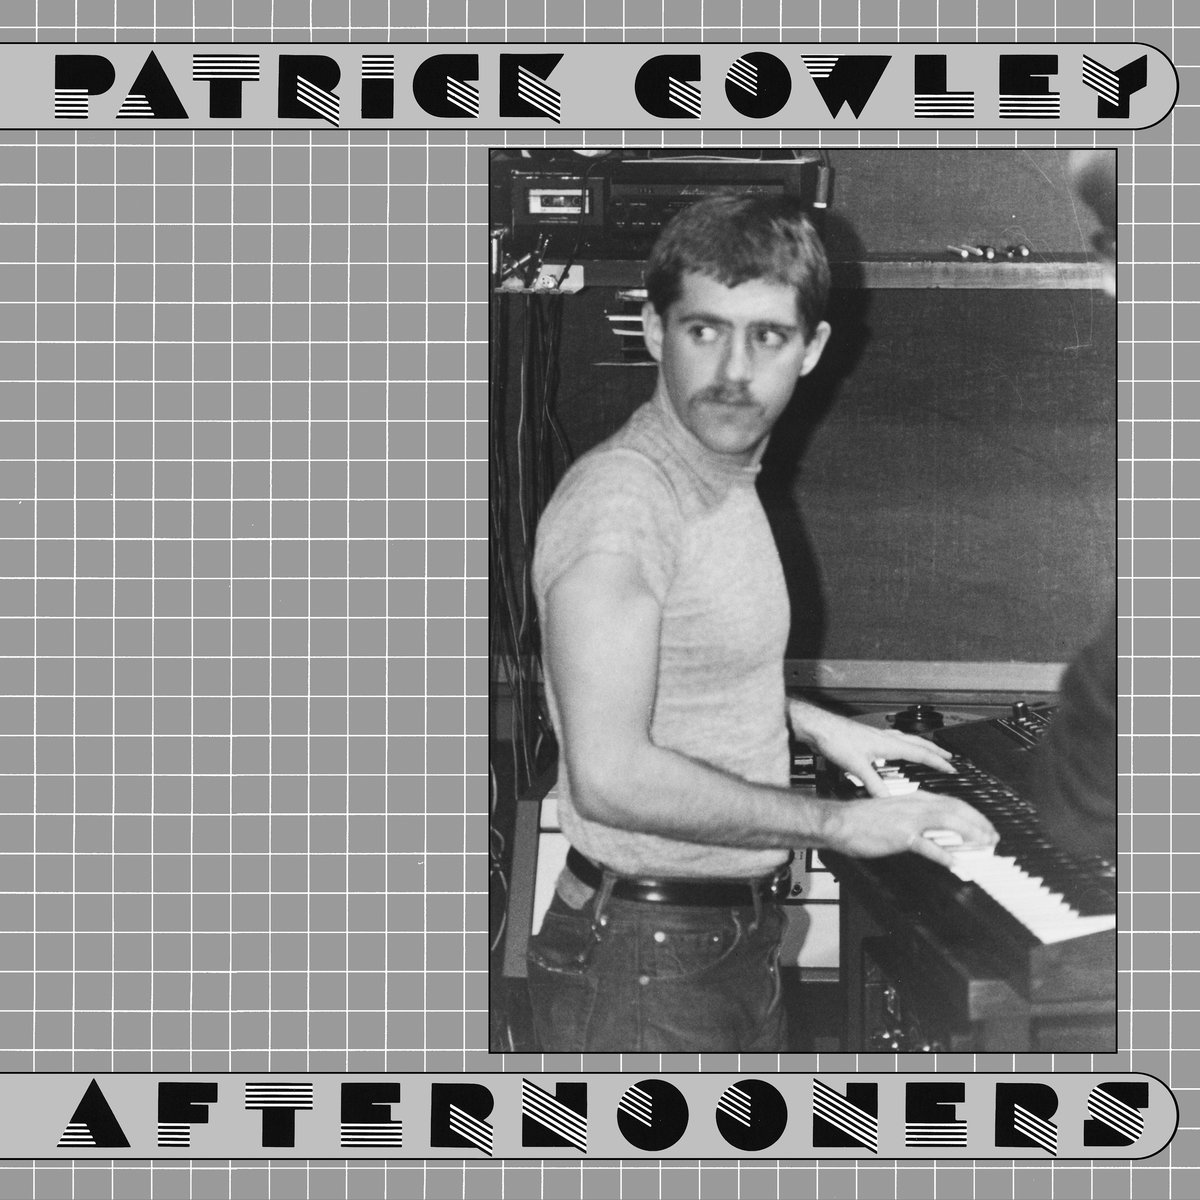 Album of the Week: Patrick Cowley – Afternooners